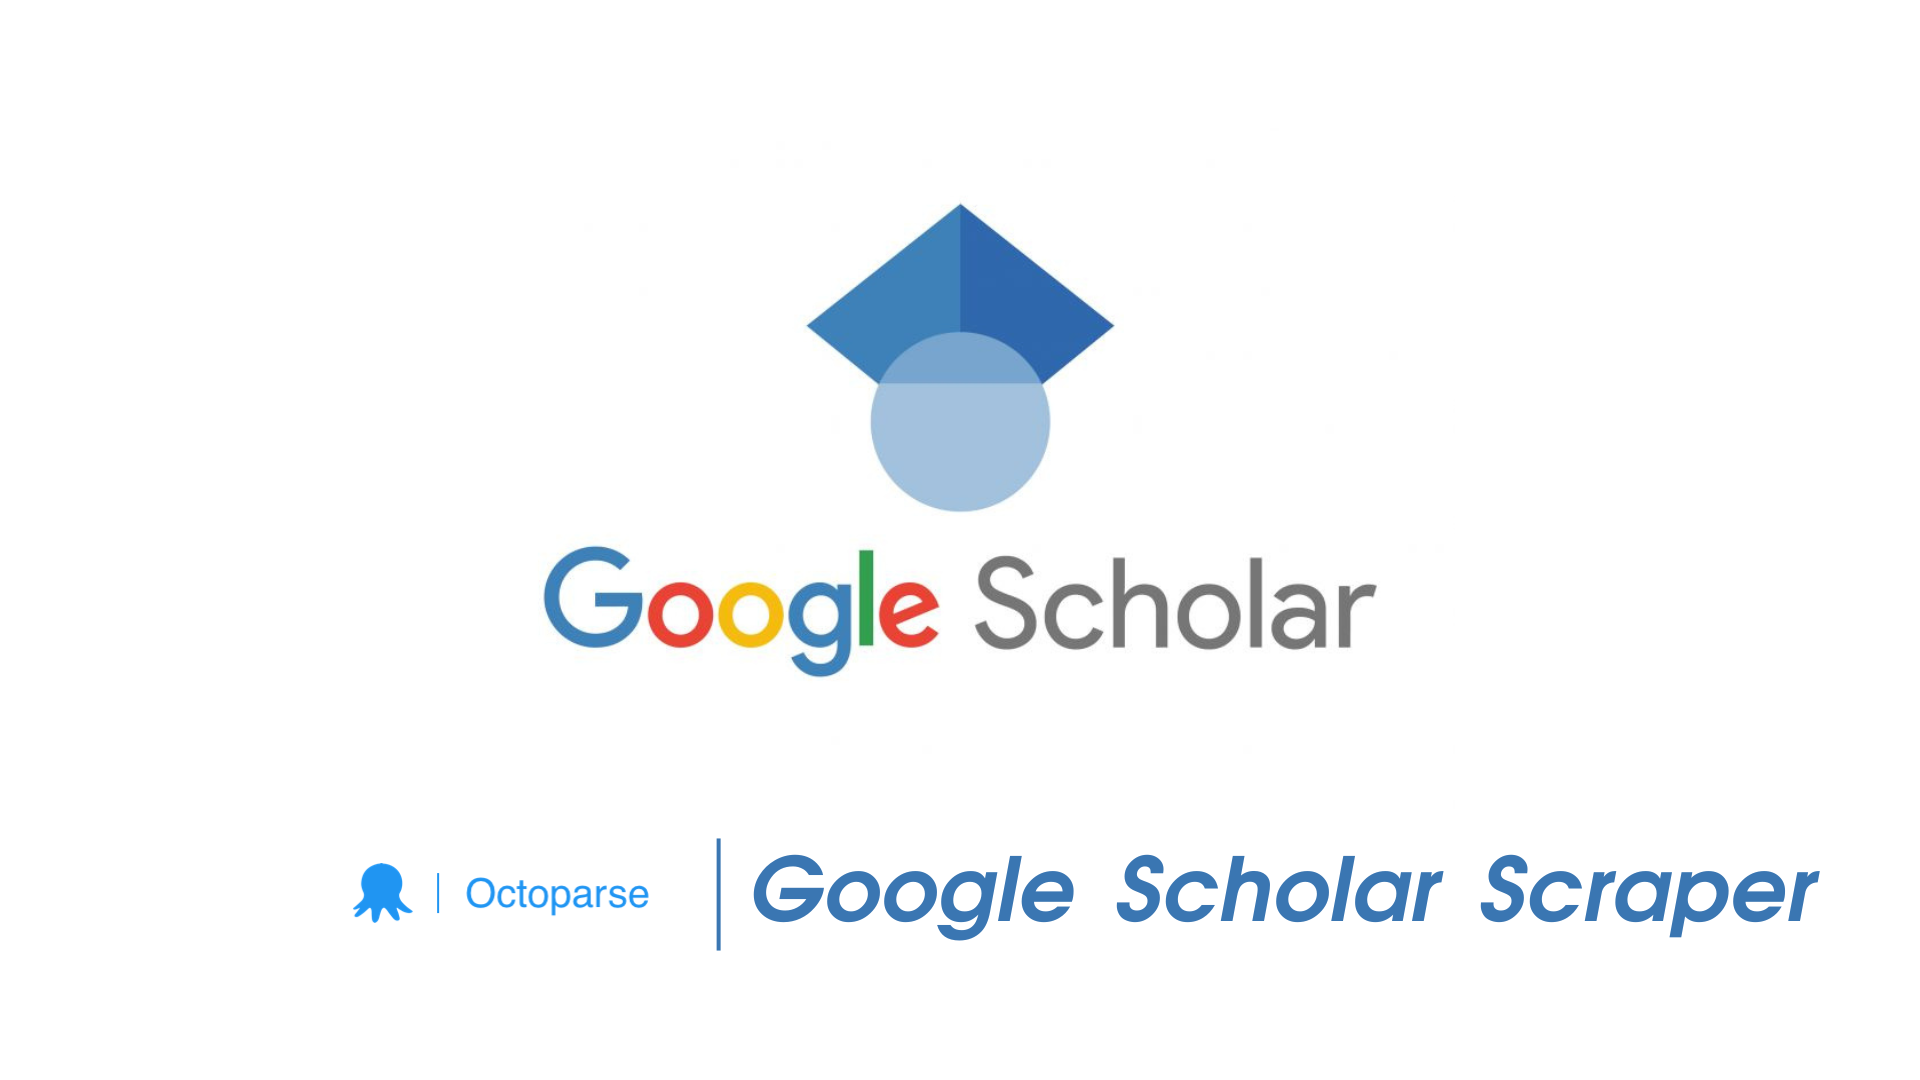 Google Scholar Scraper